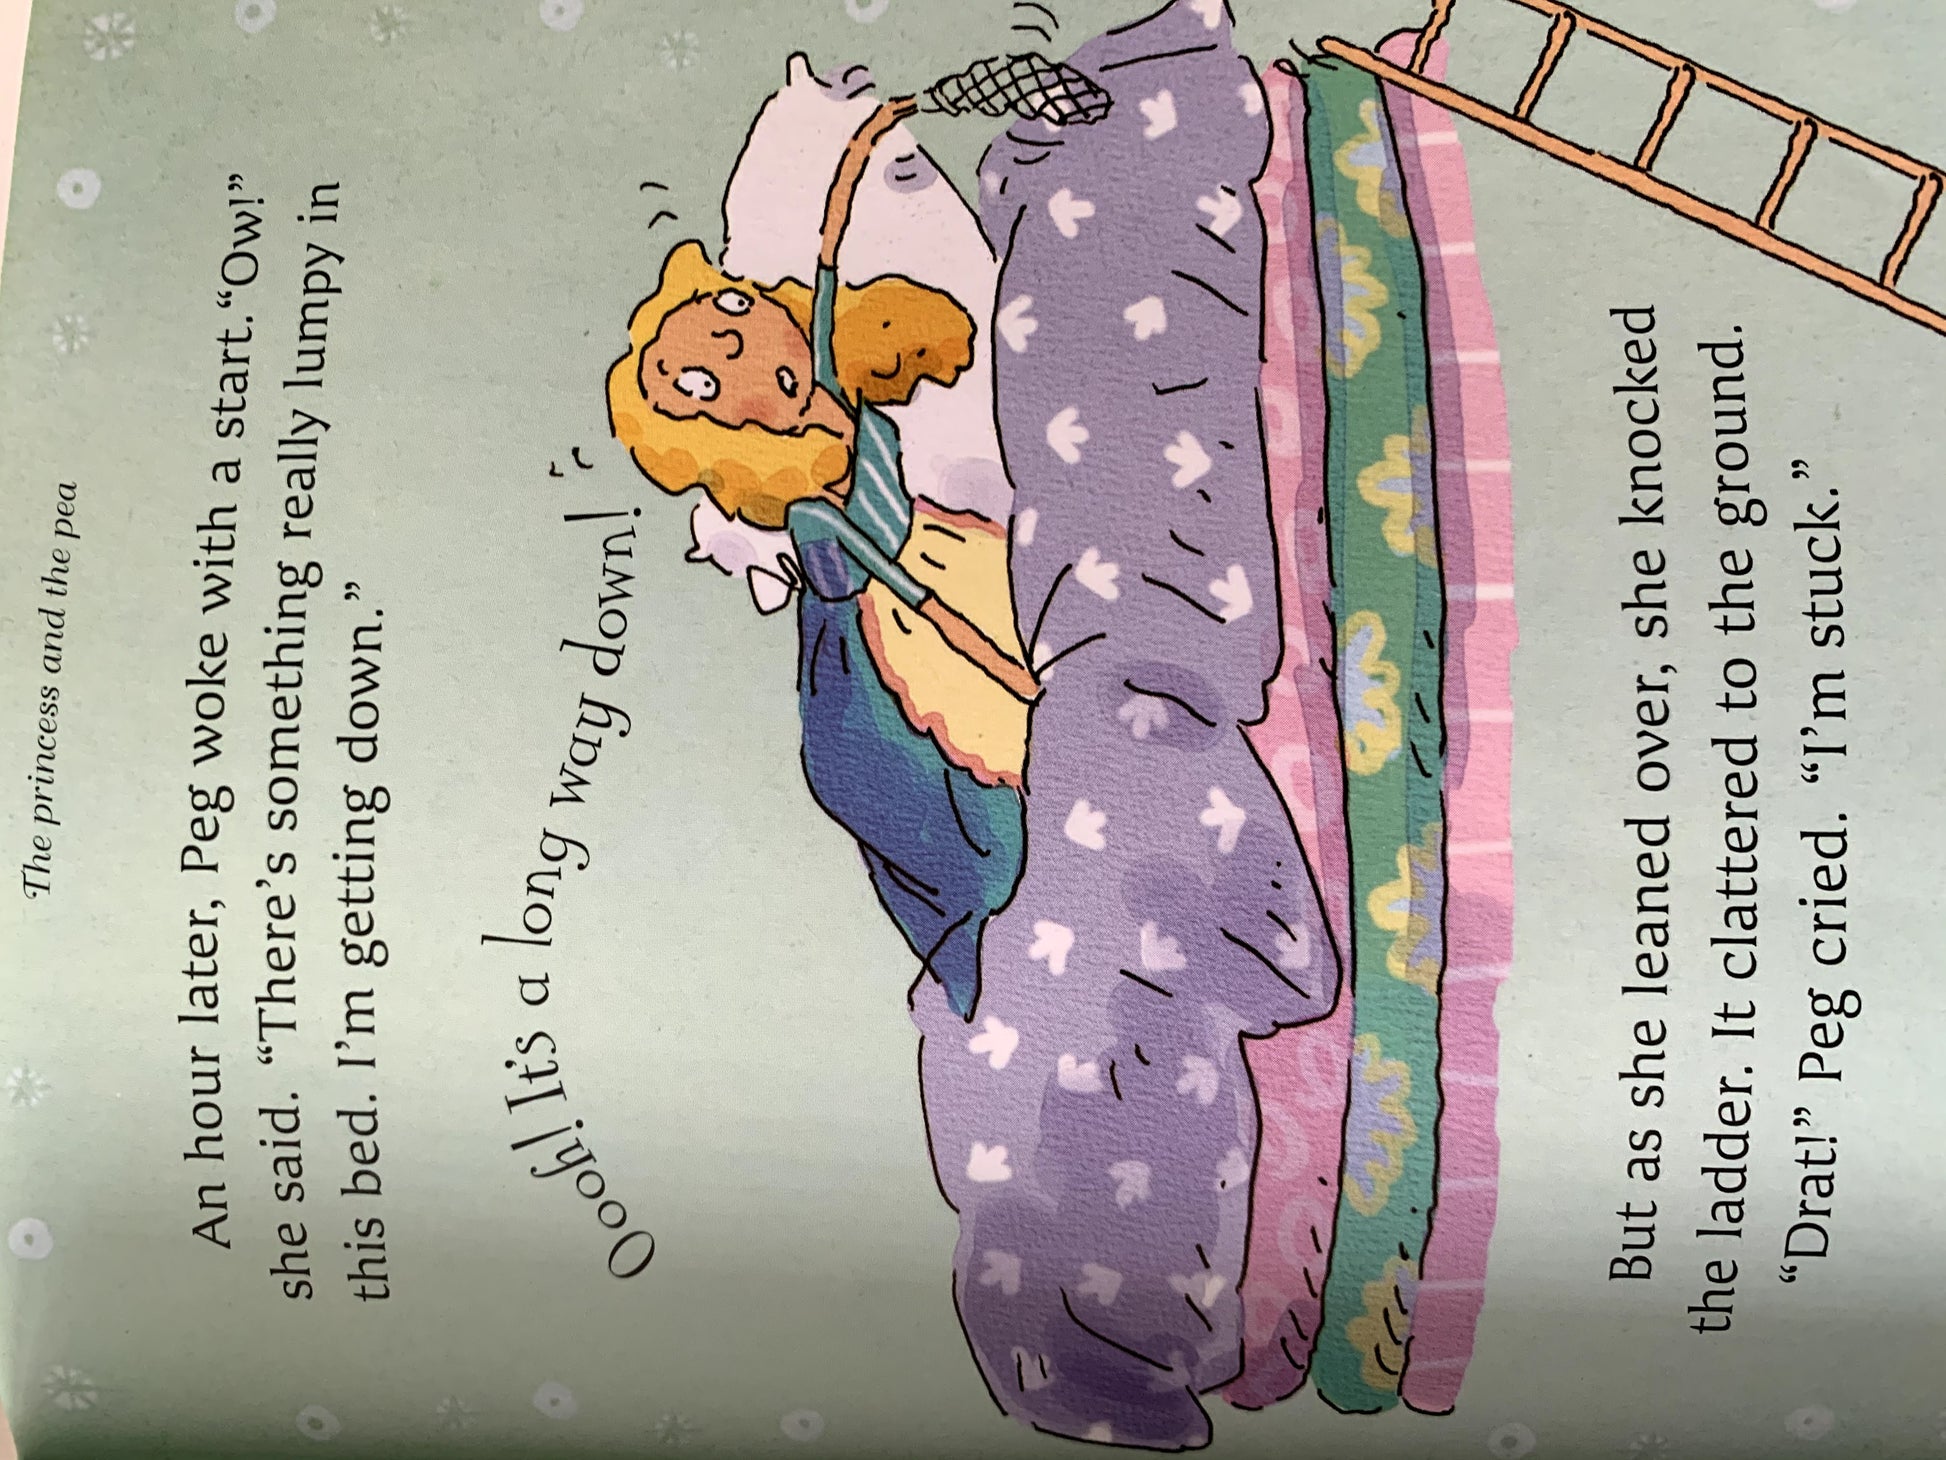 Illustrated stories for Girls Like New Usborne  (6264258756793)